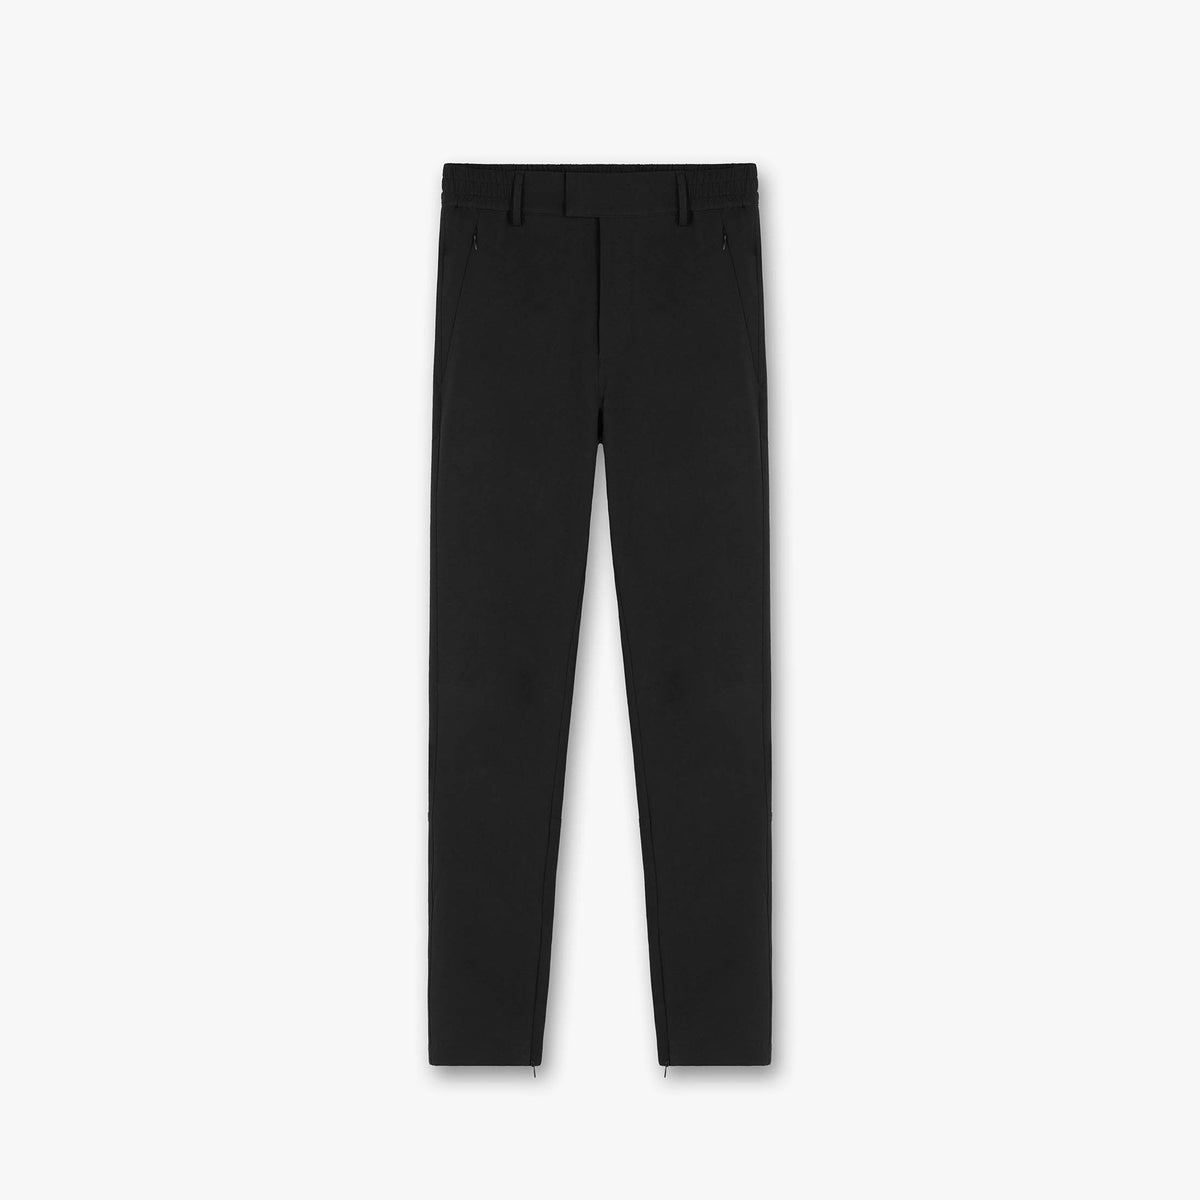 Uniqlo Men's Cotton Spandex Pants (size 33, dark green), Men's